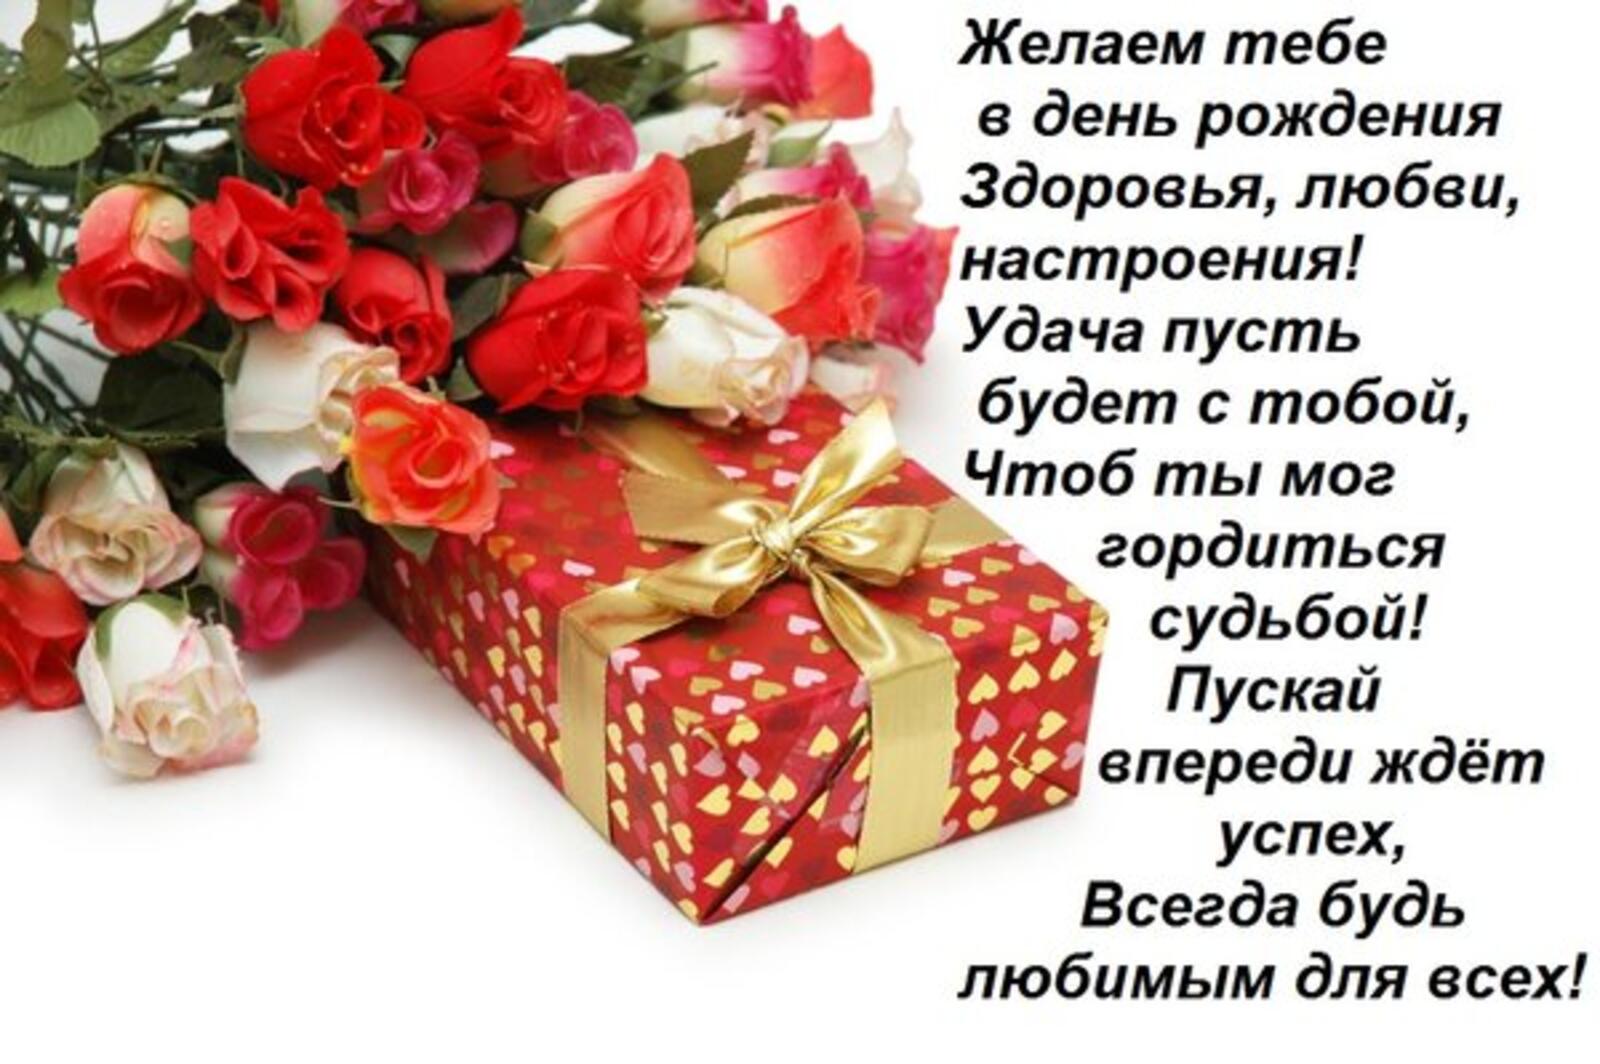 flowers gift verse